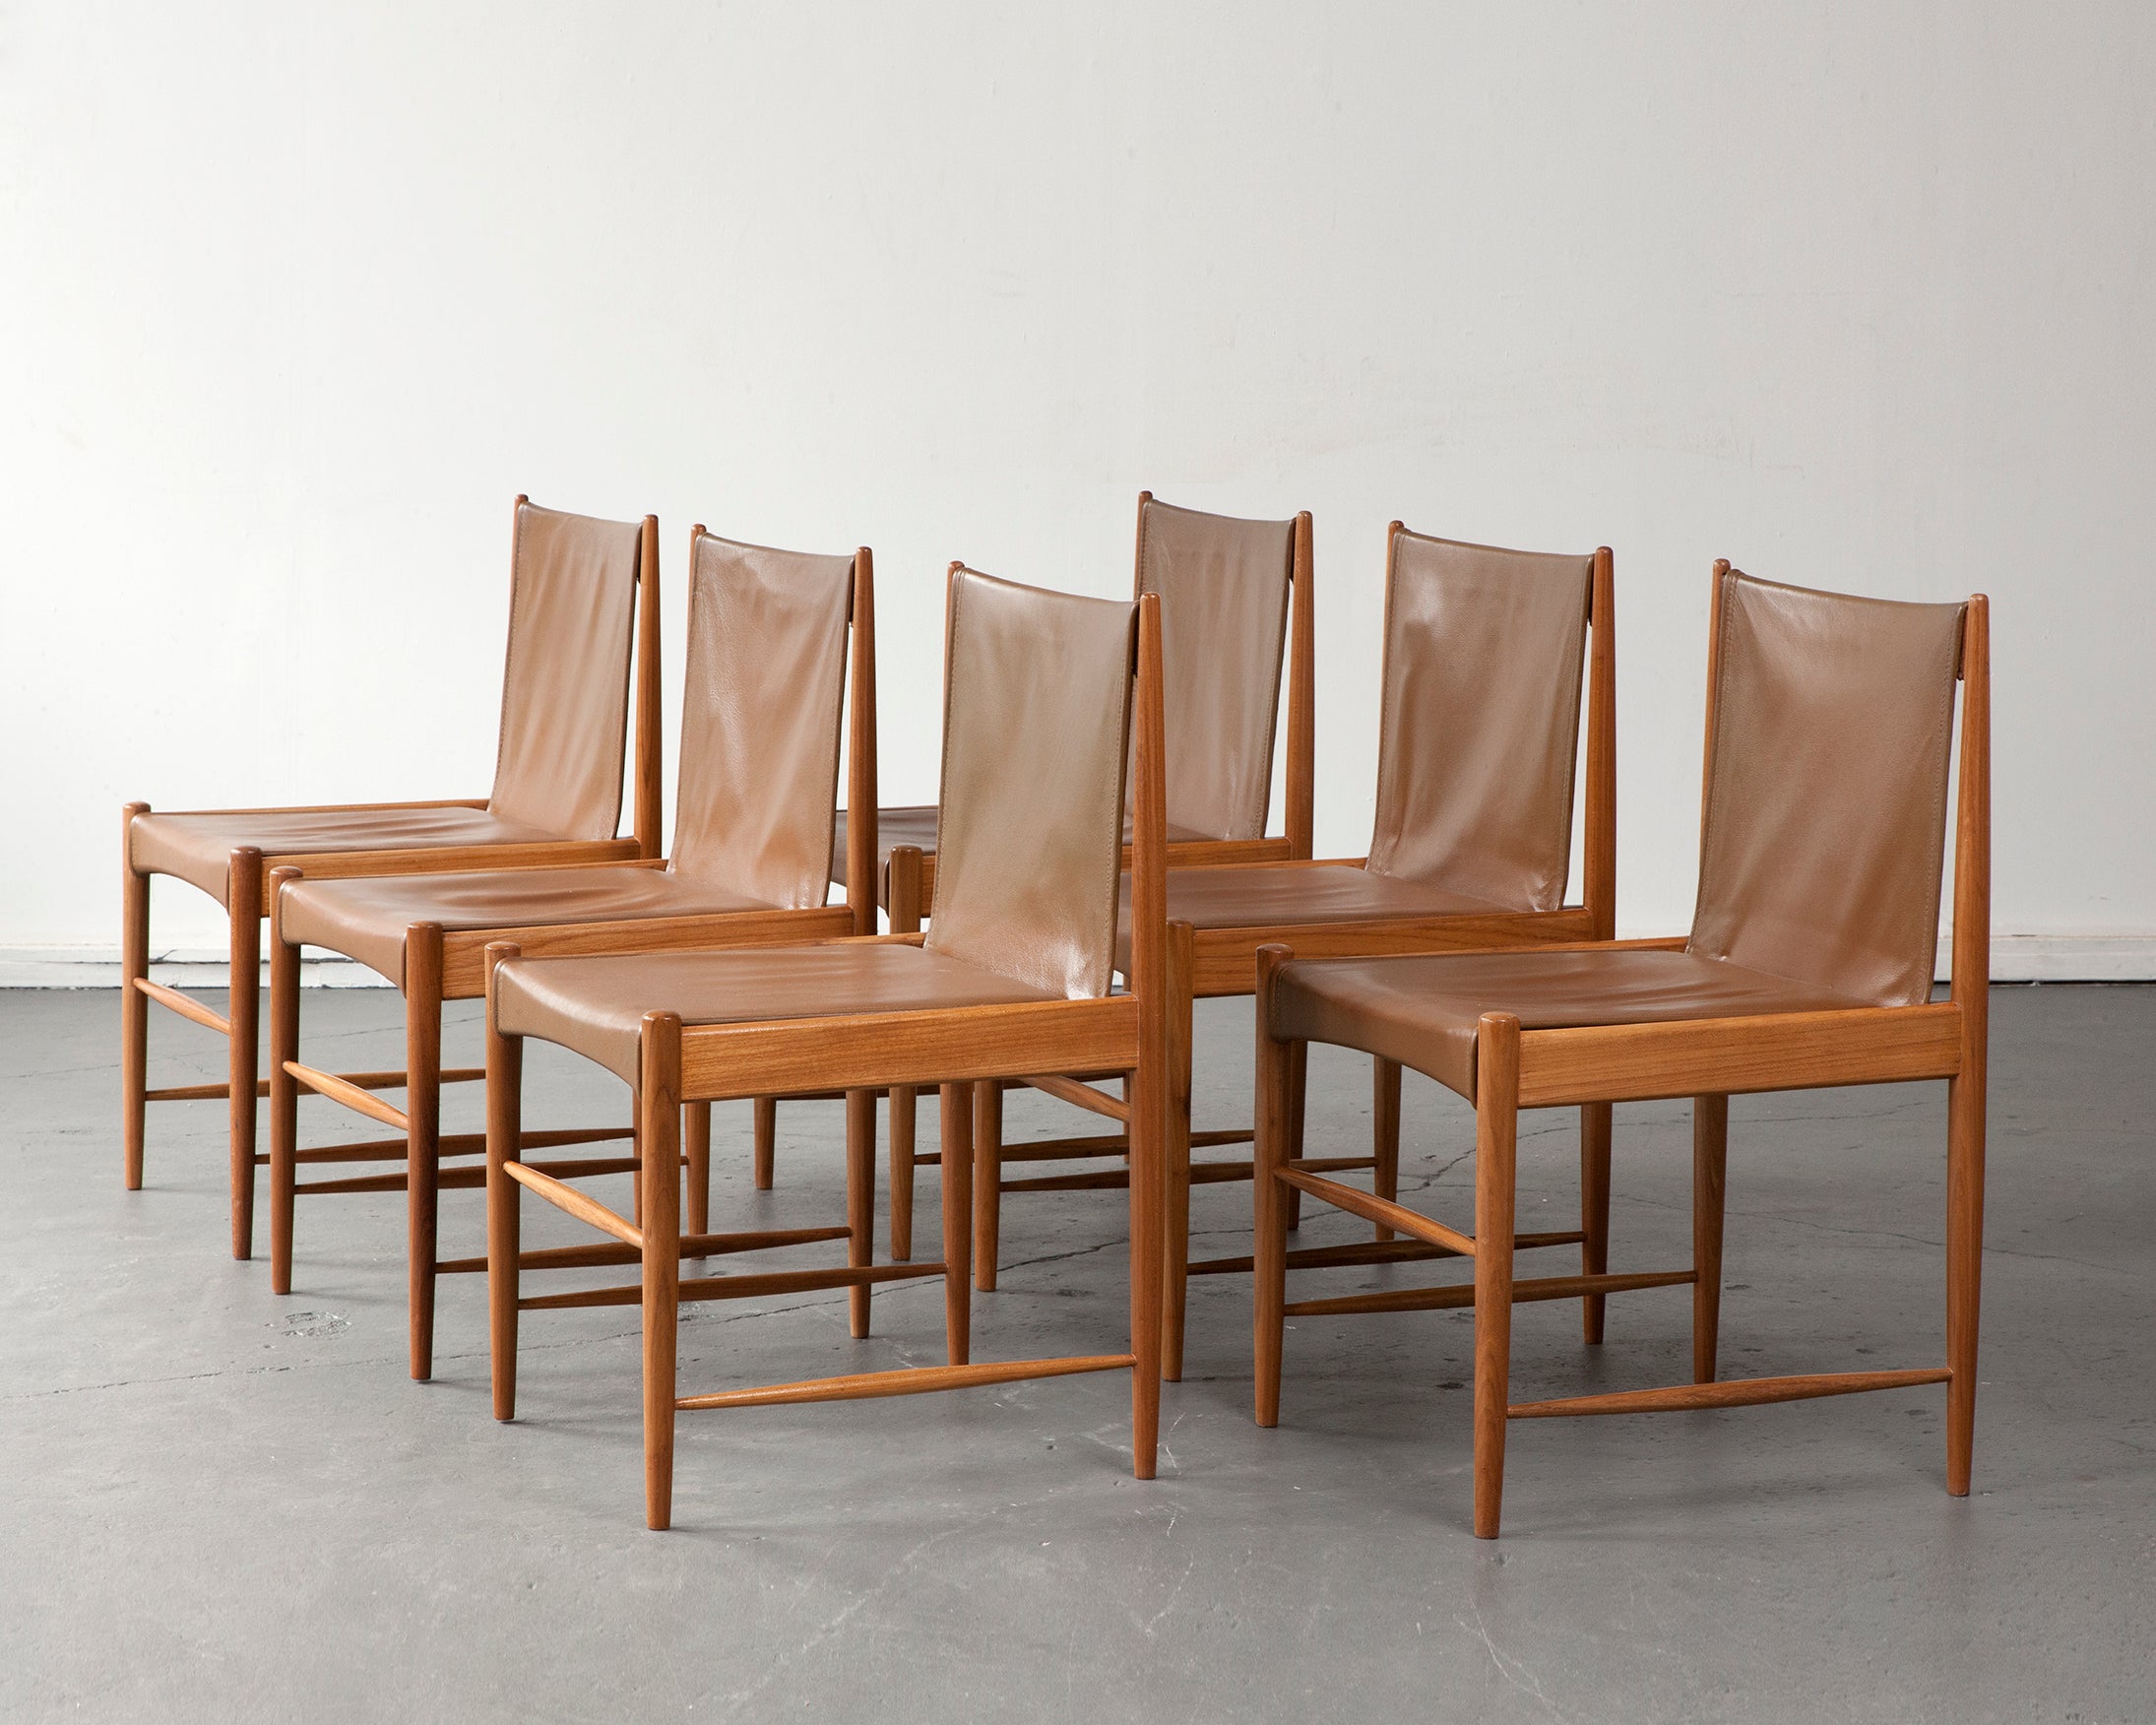 Set of Six "Cantu" Chairs by Sergio Rodrigues, Brazil, circa 1959